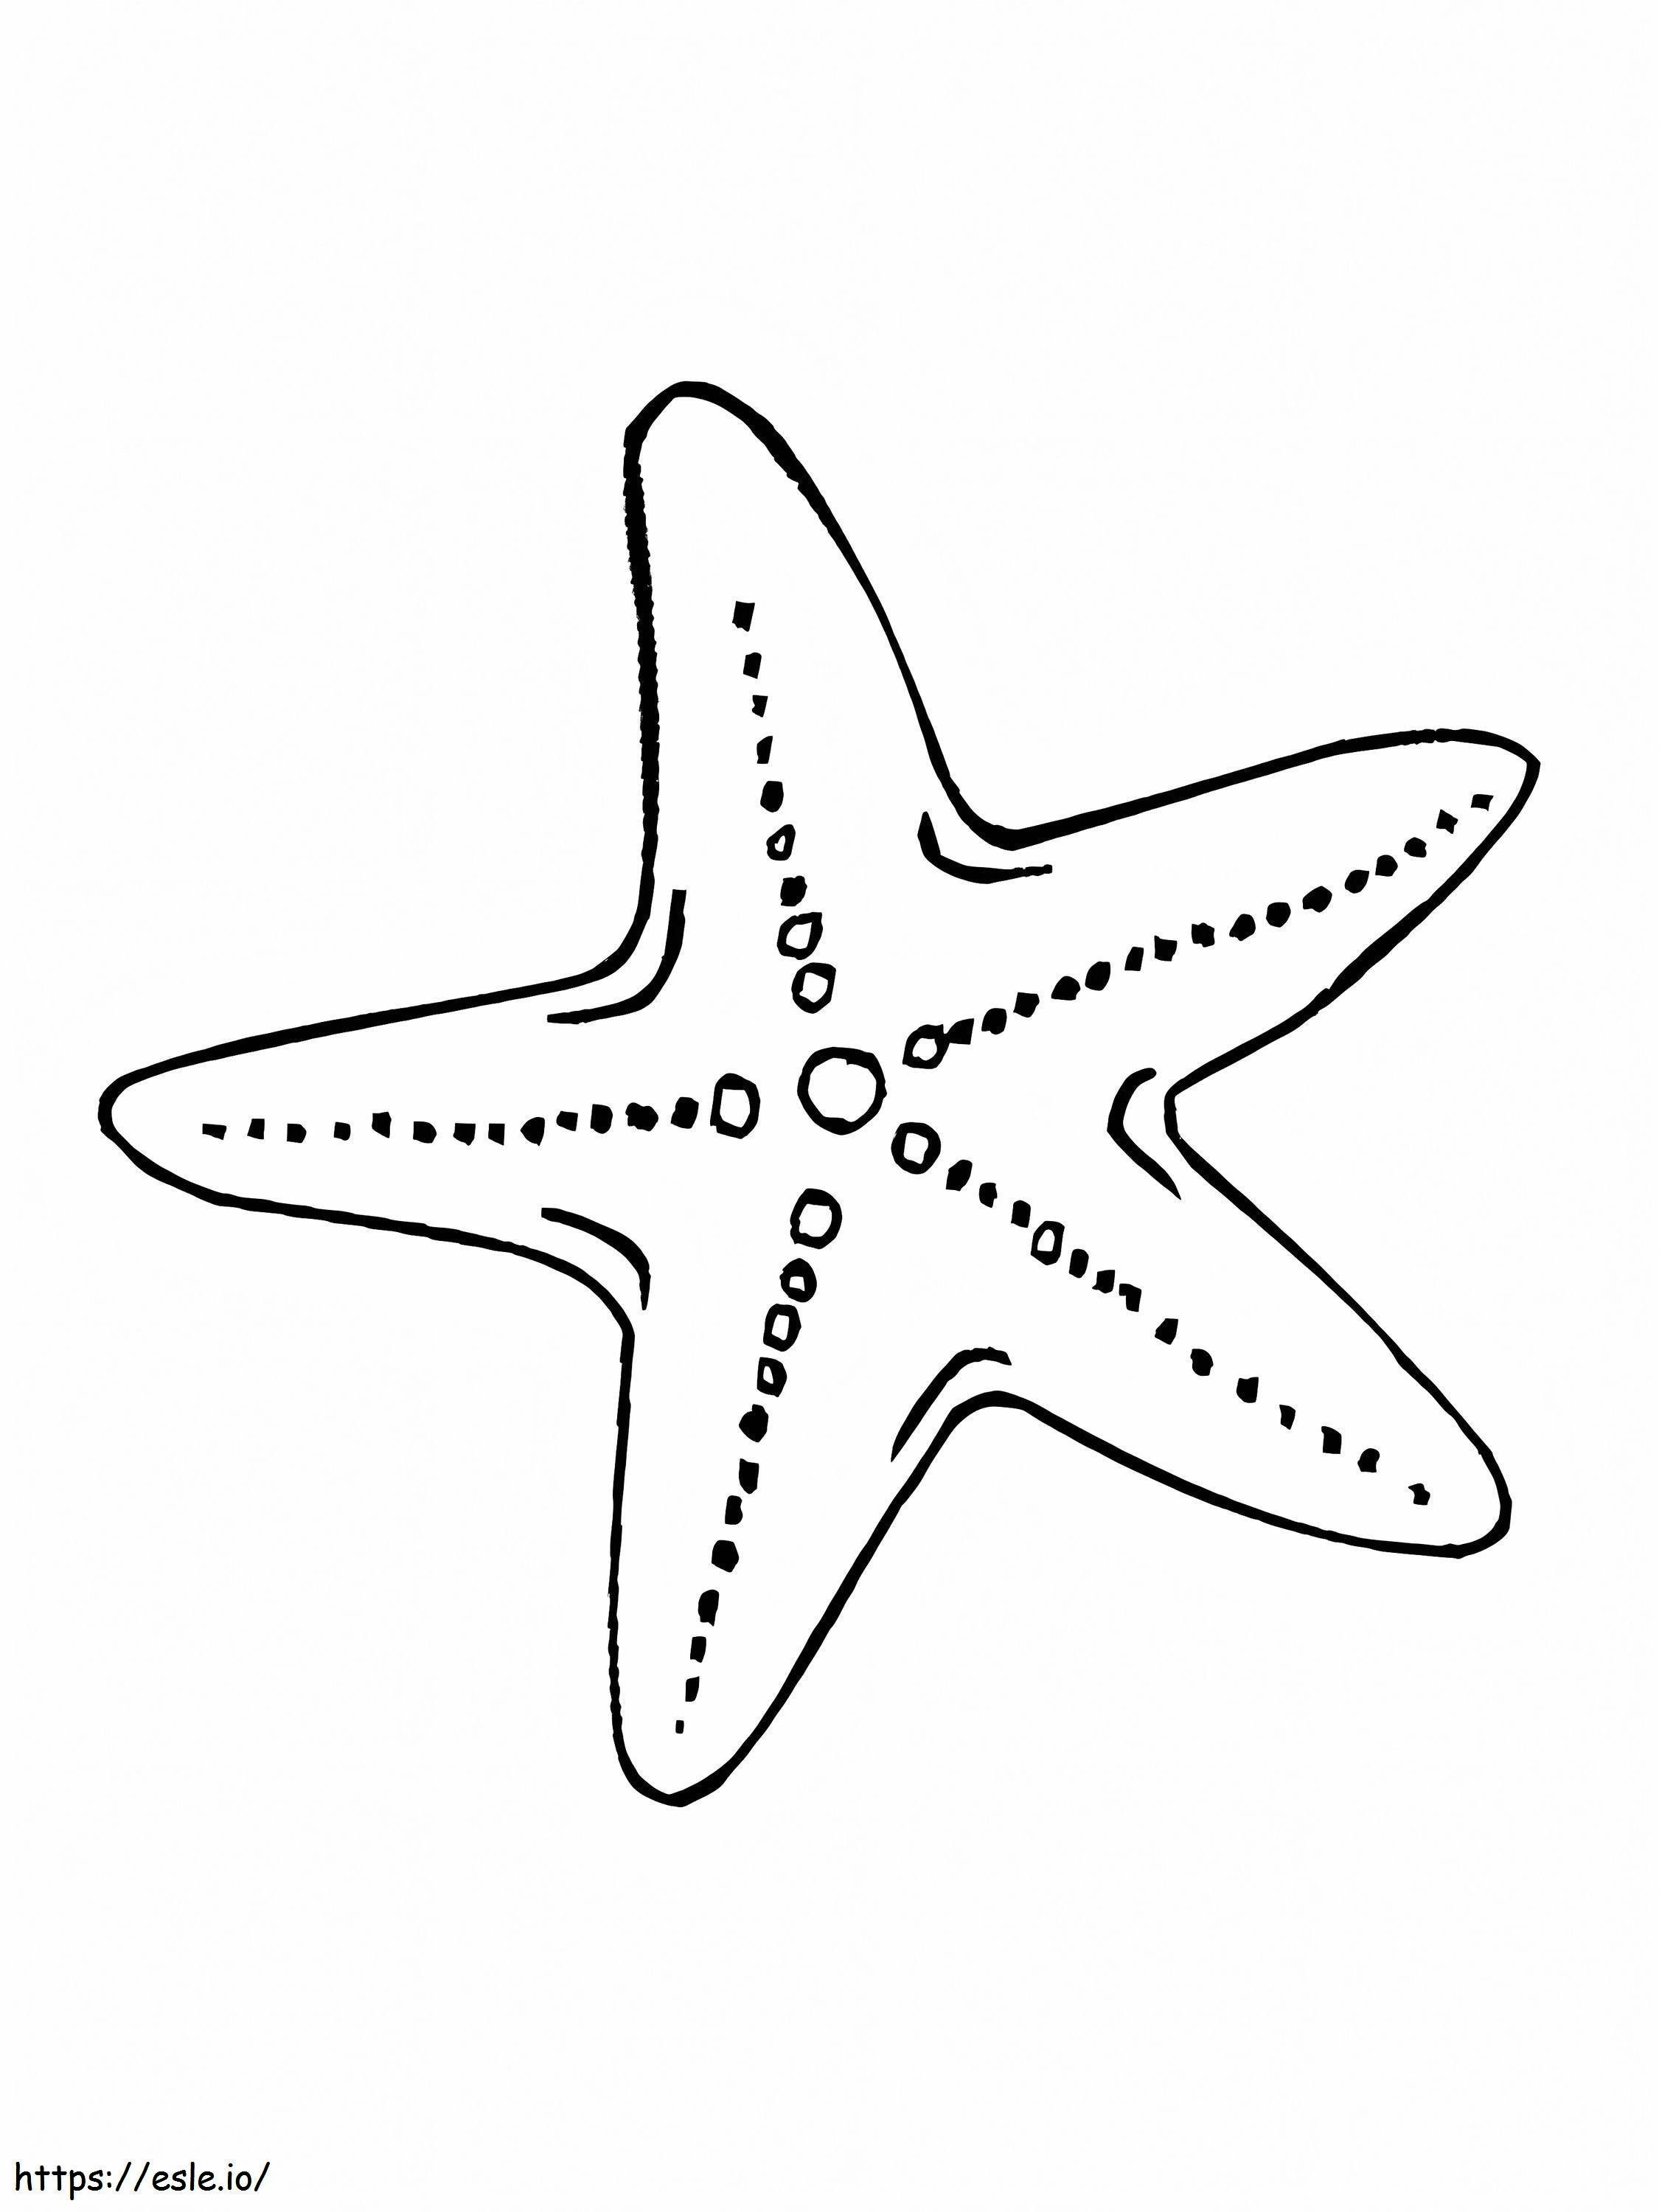 Patrick Estrela do Mar para colorir